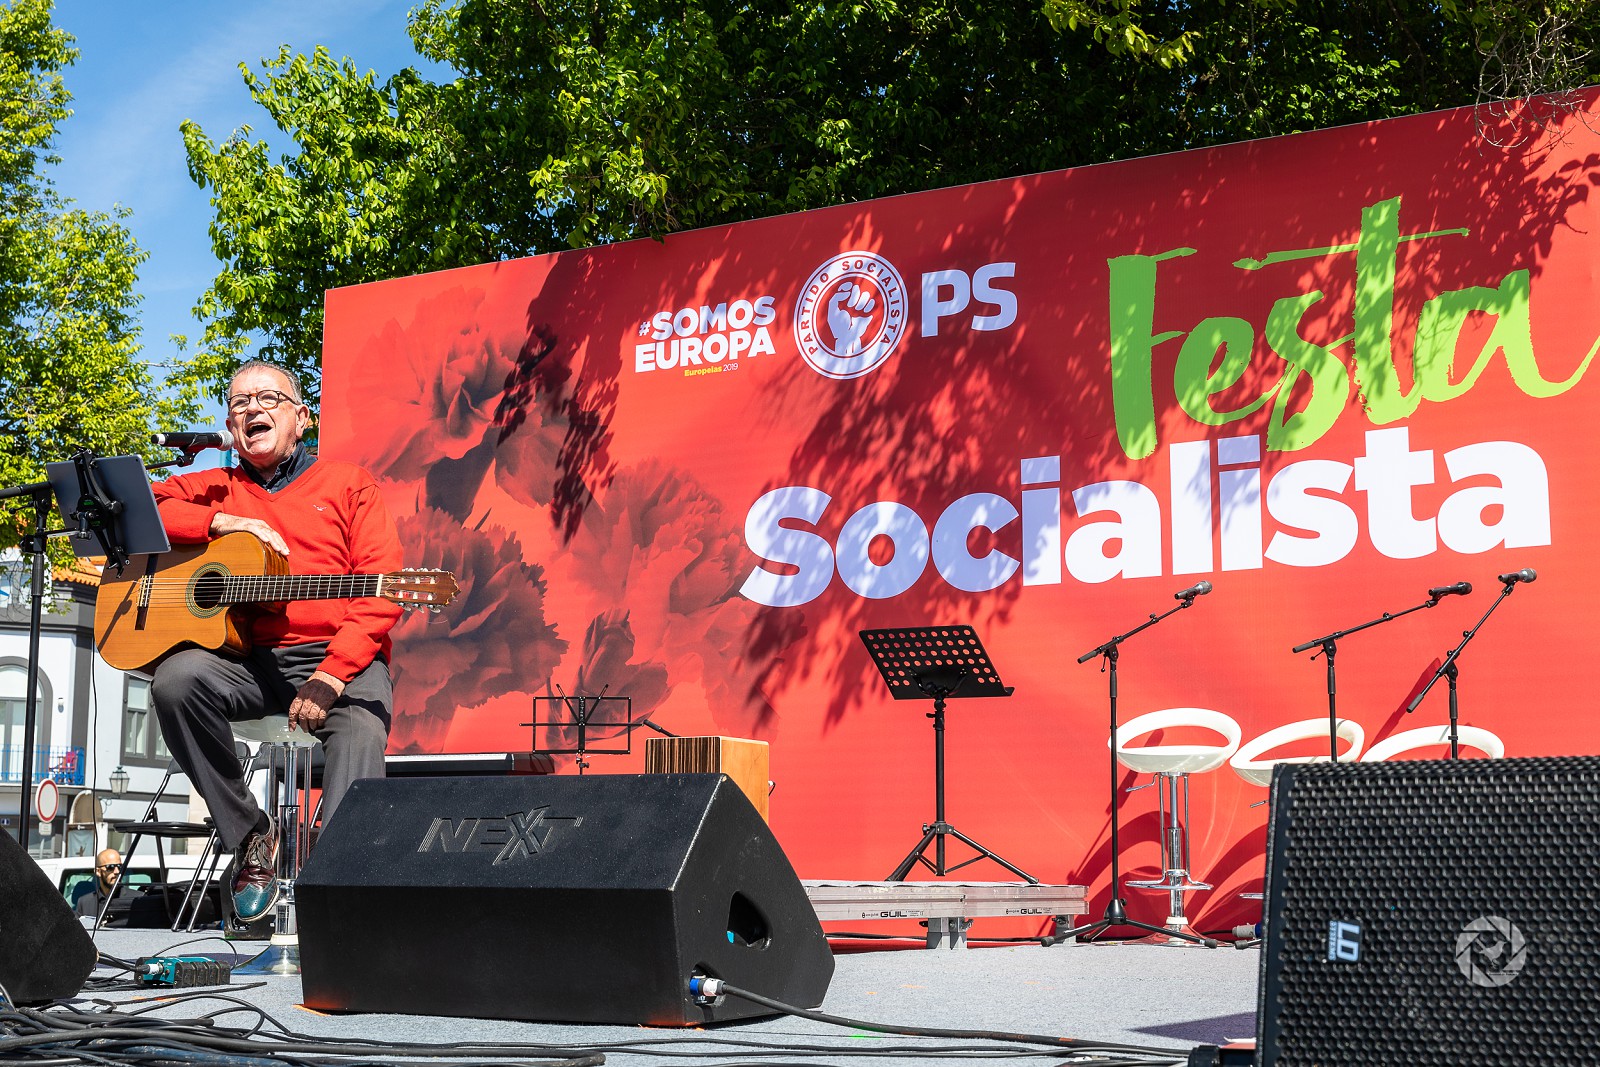 Festa Socialista em Aveiro 20199 (1).jpg